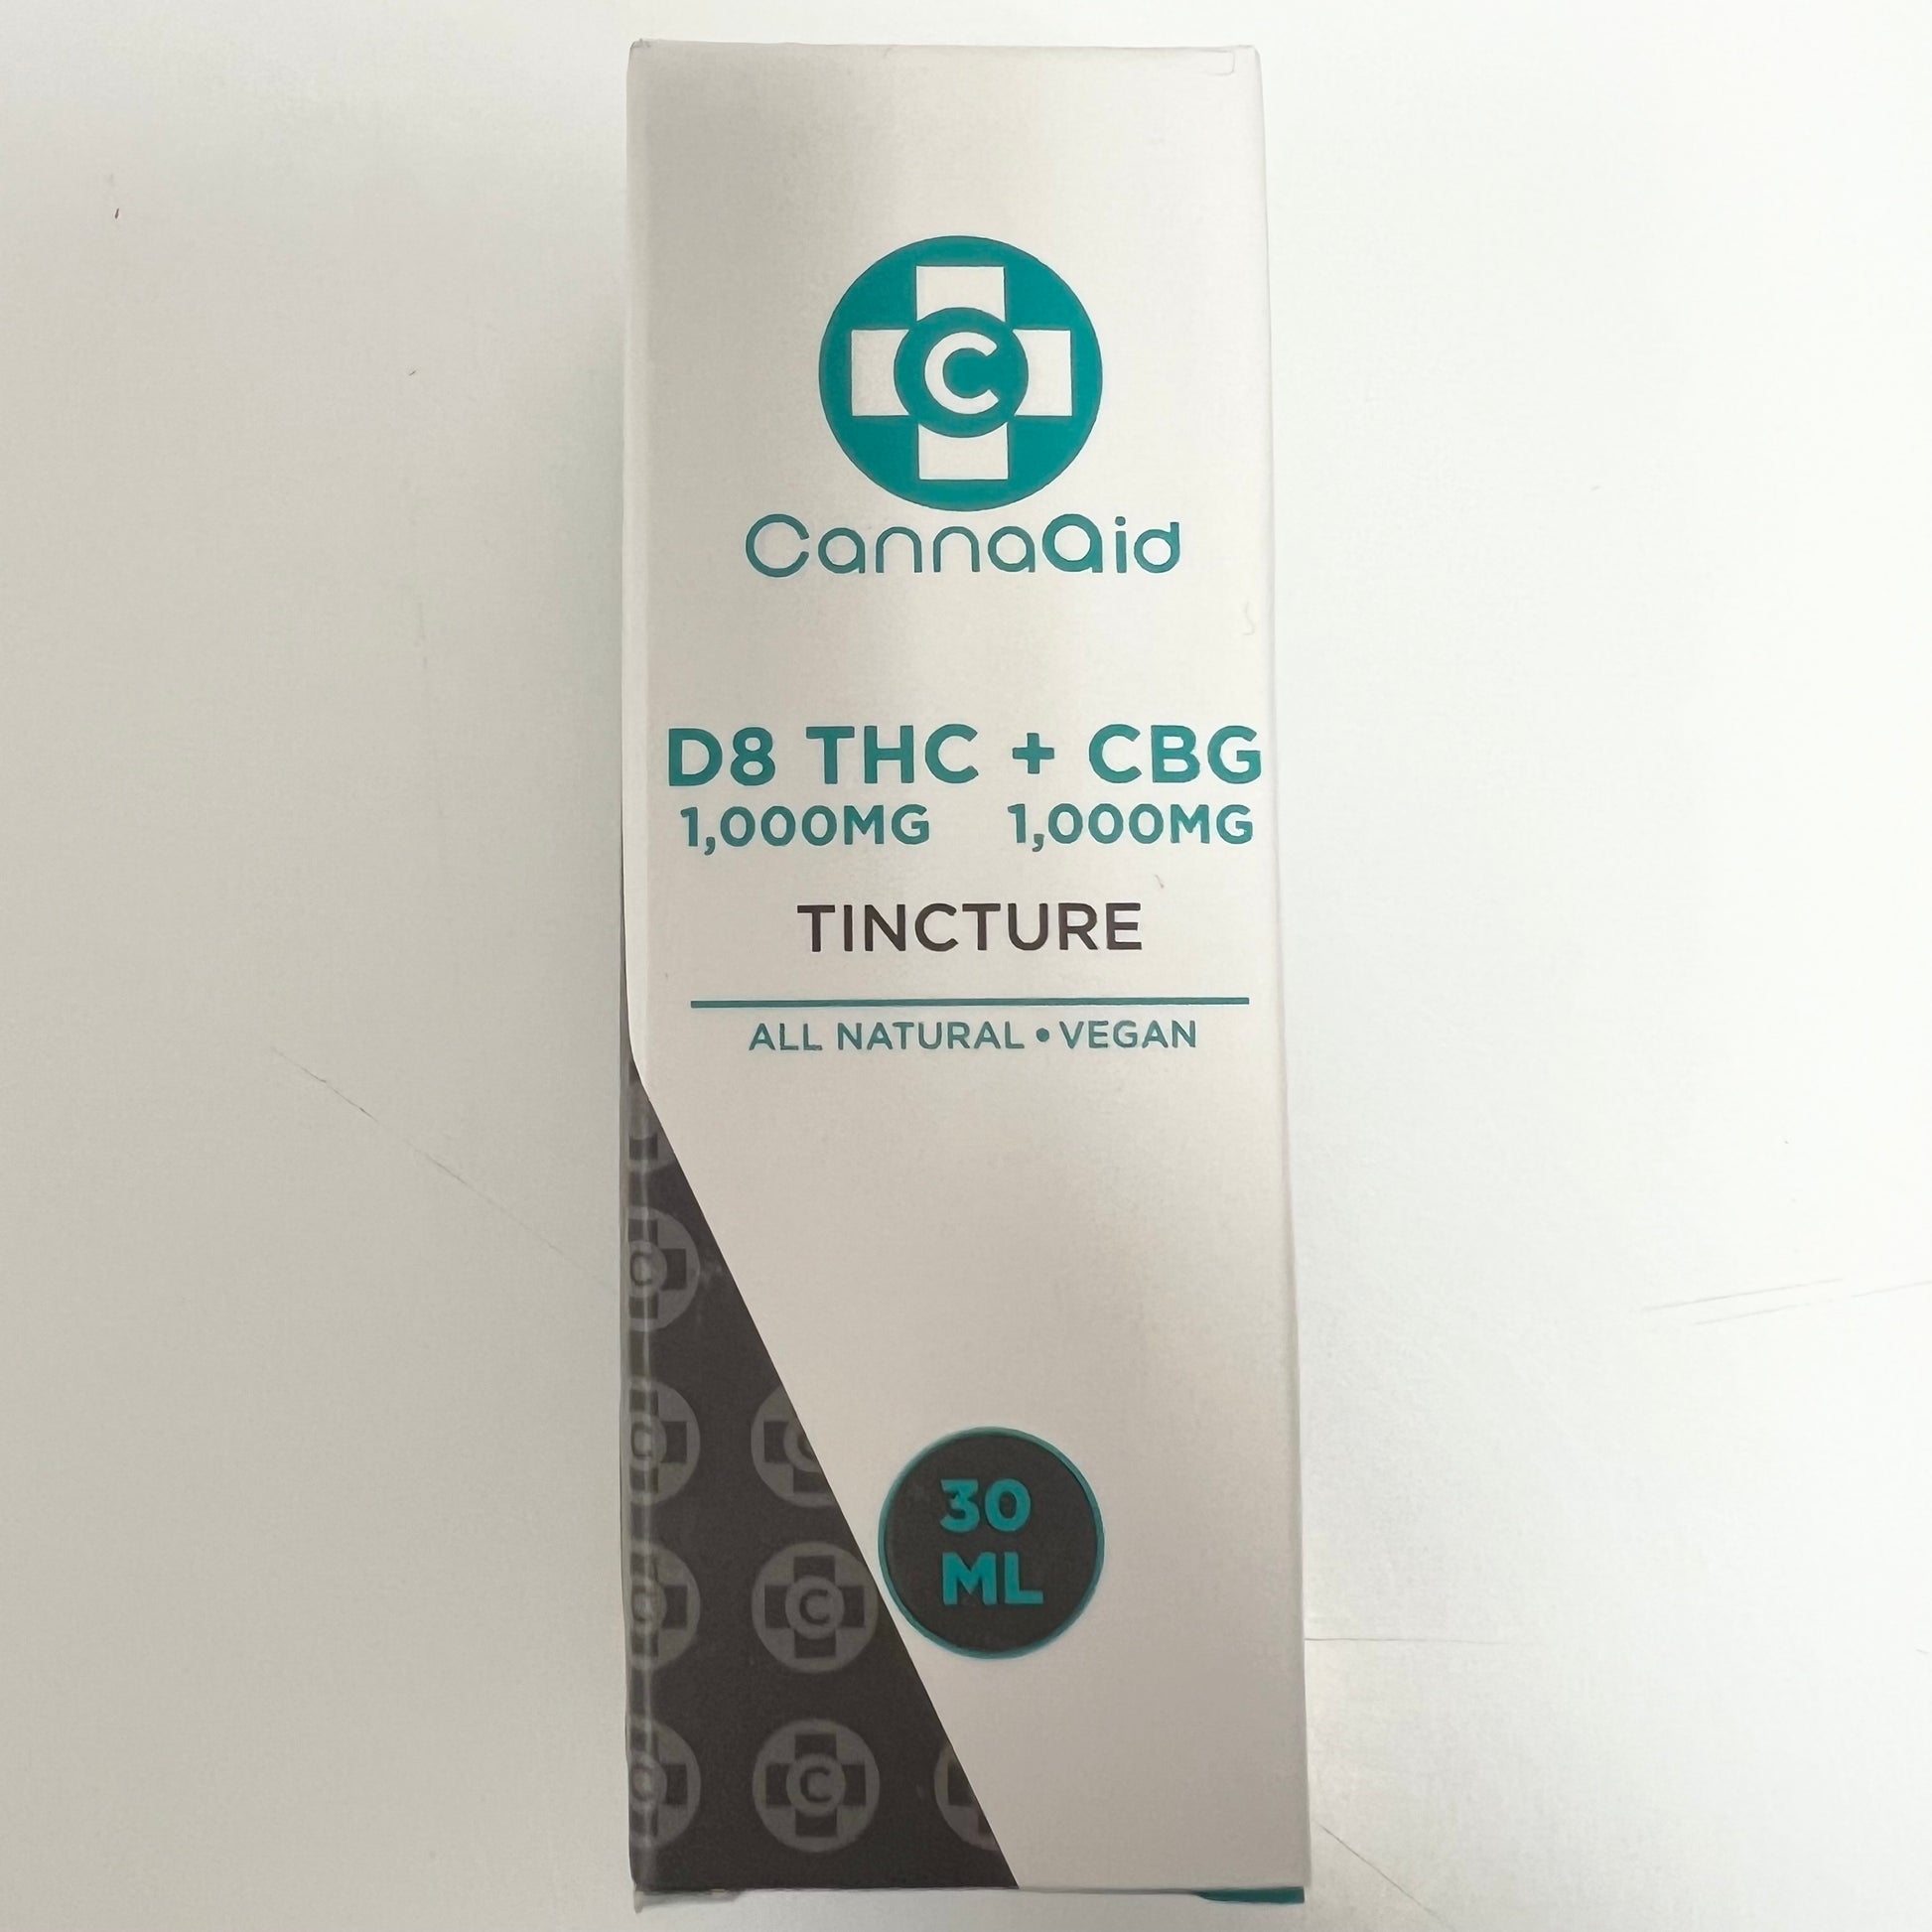 Cannaaid D8 + CBG Pain Relief Tincture